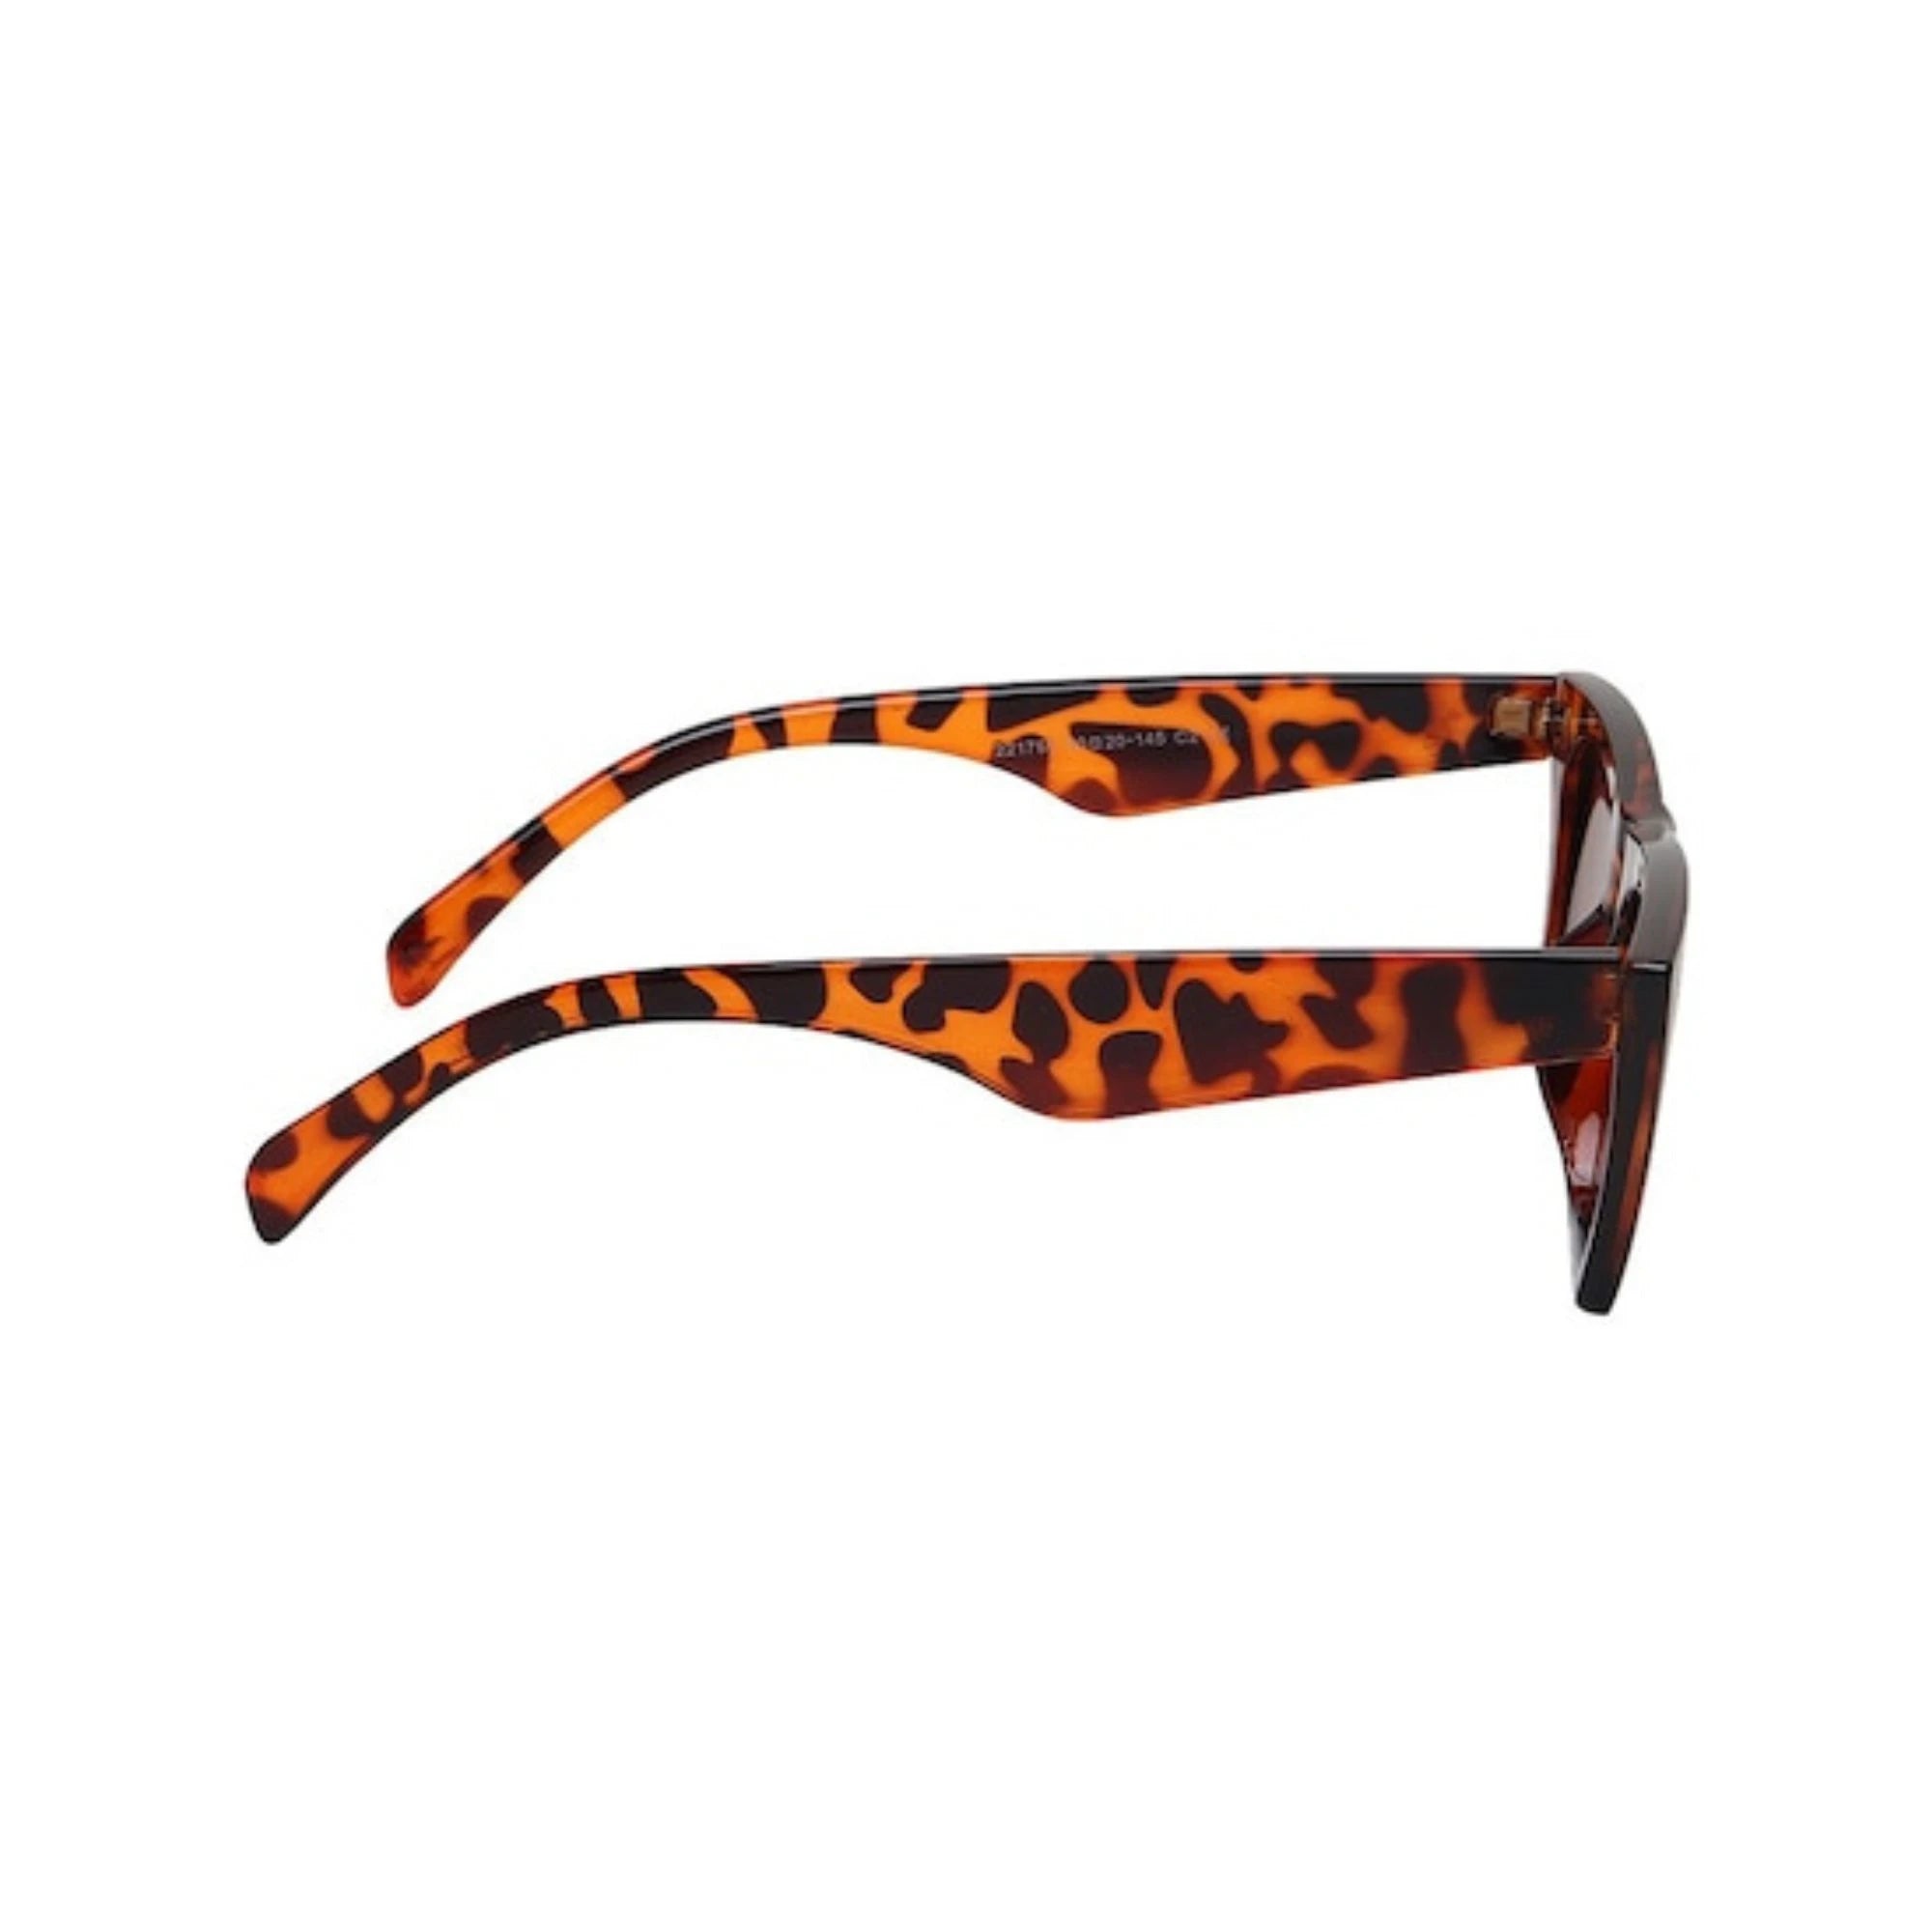 Flat Top Cateye Sunglasses For Women - Leopard Print